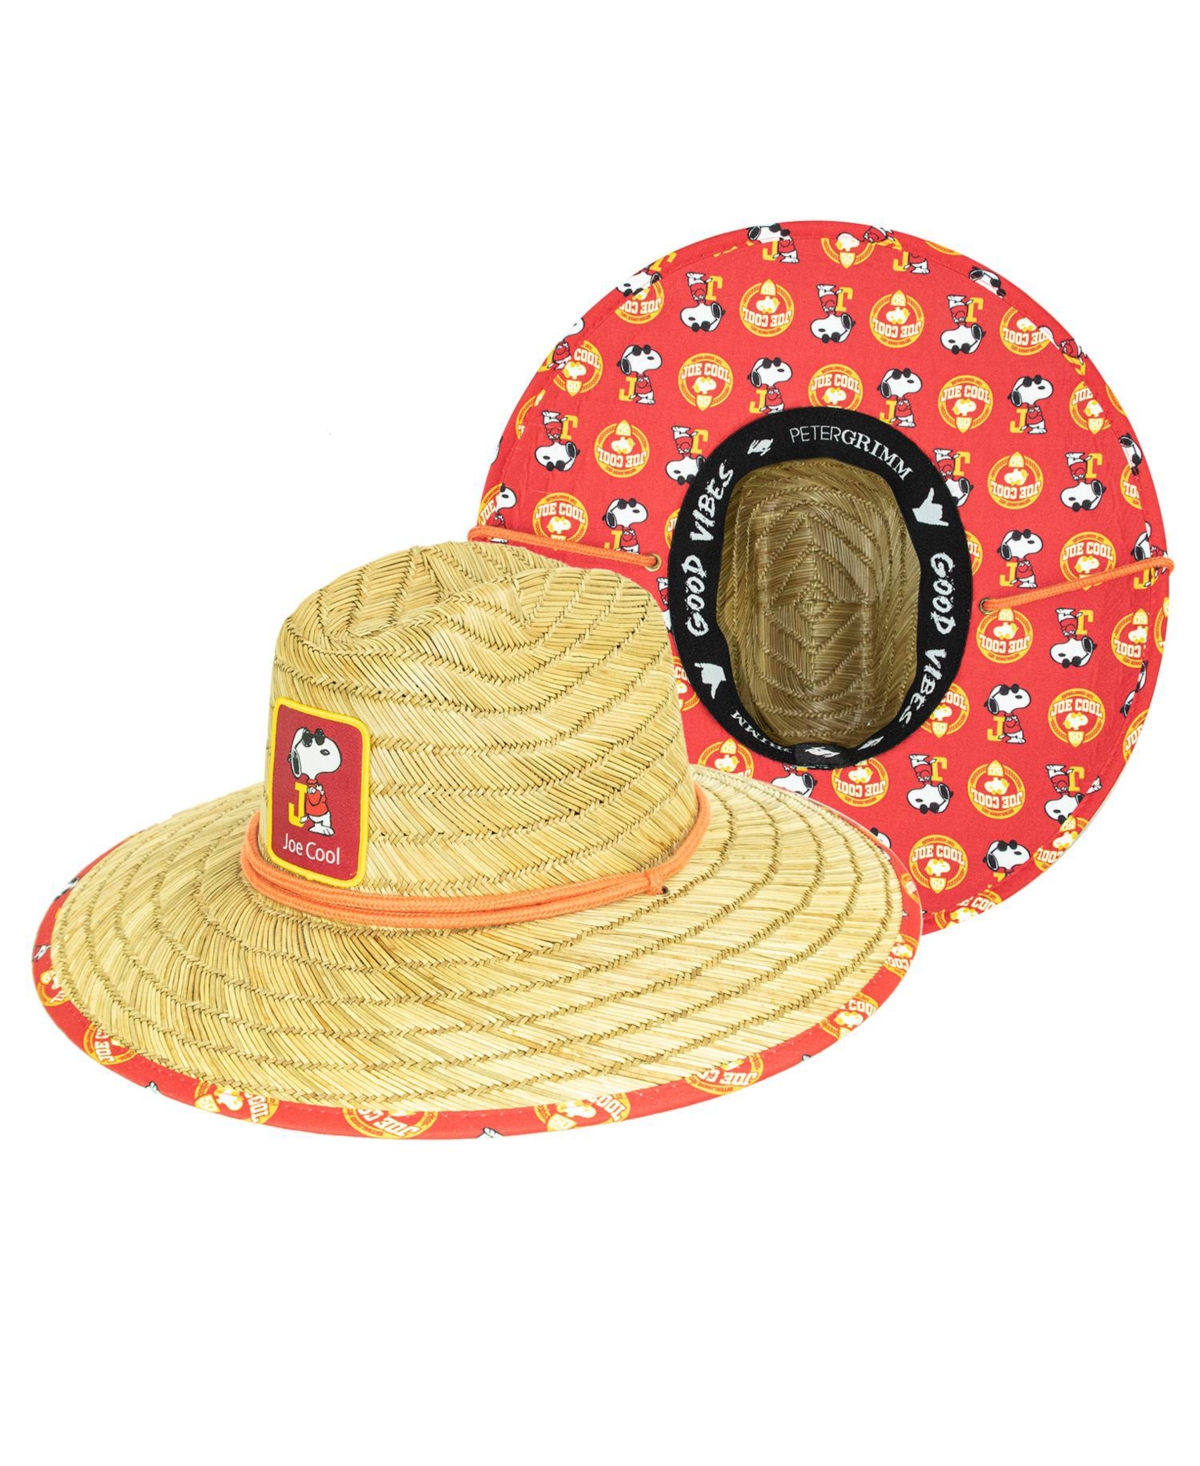 Joe Cool Peanuts Lifeguard Hat - Natural